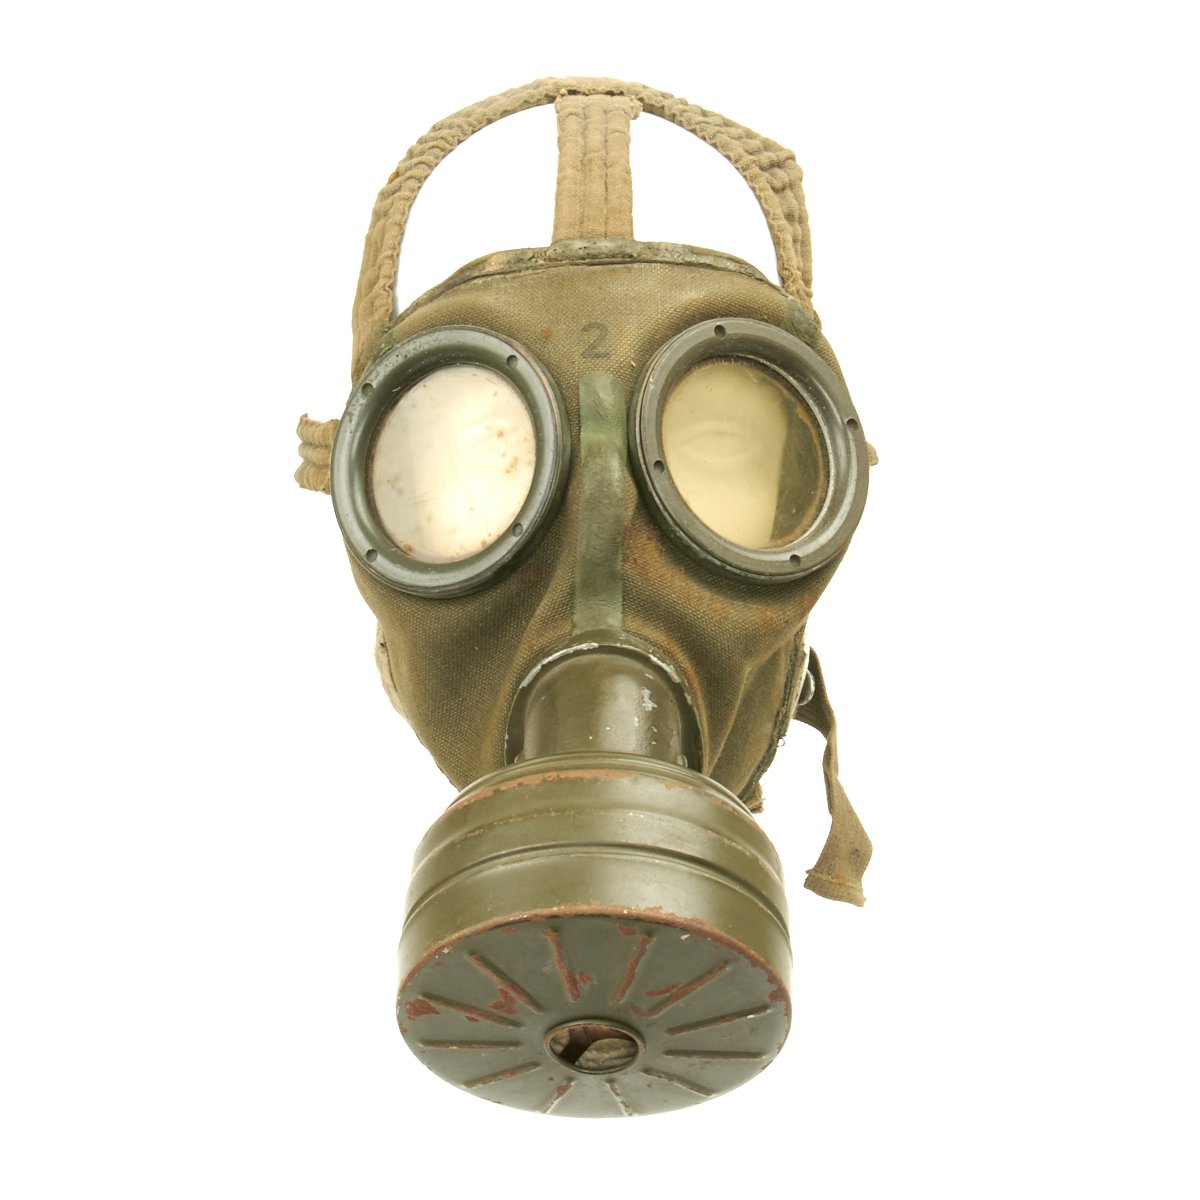 Original German WWII 1940 Luftschutz Gas Mask by Draeger ...